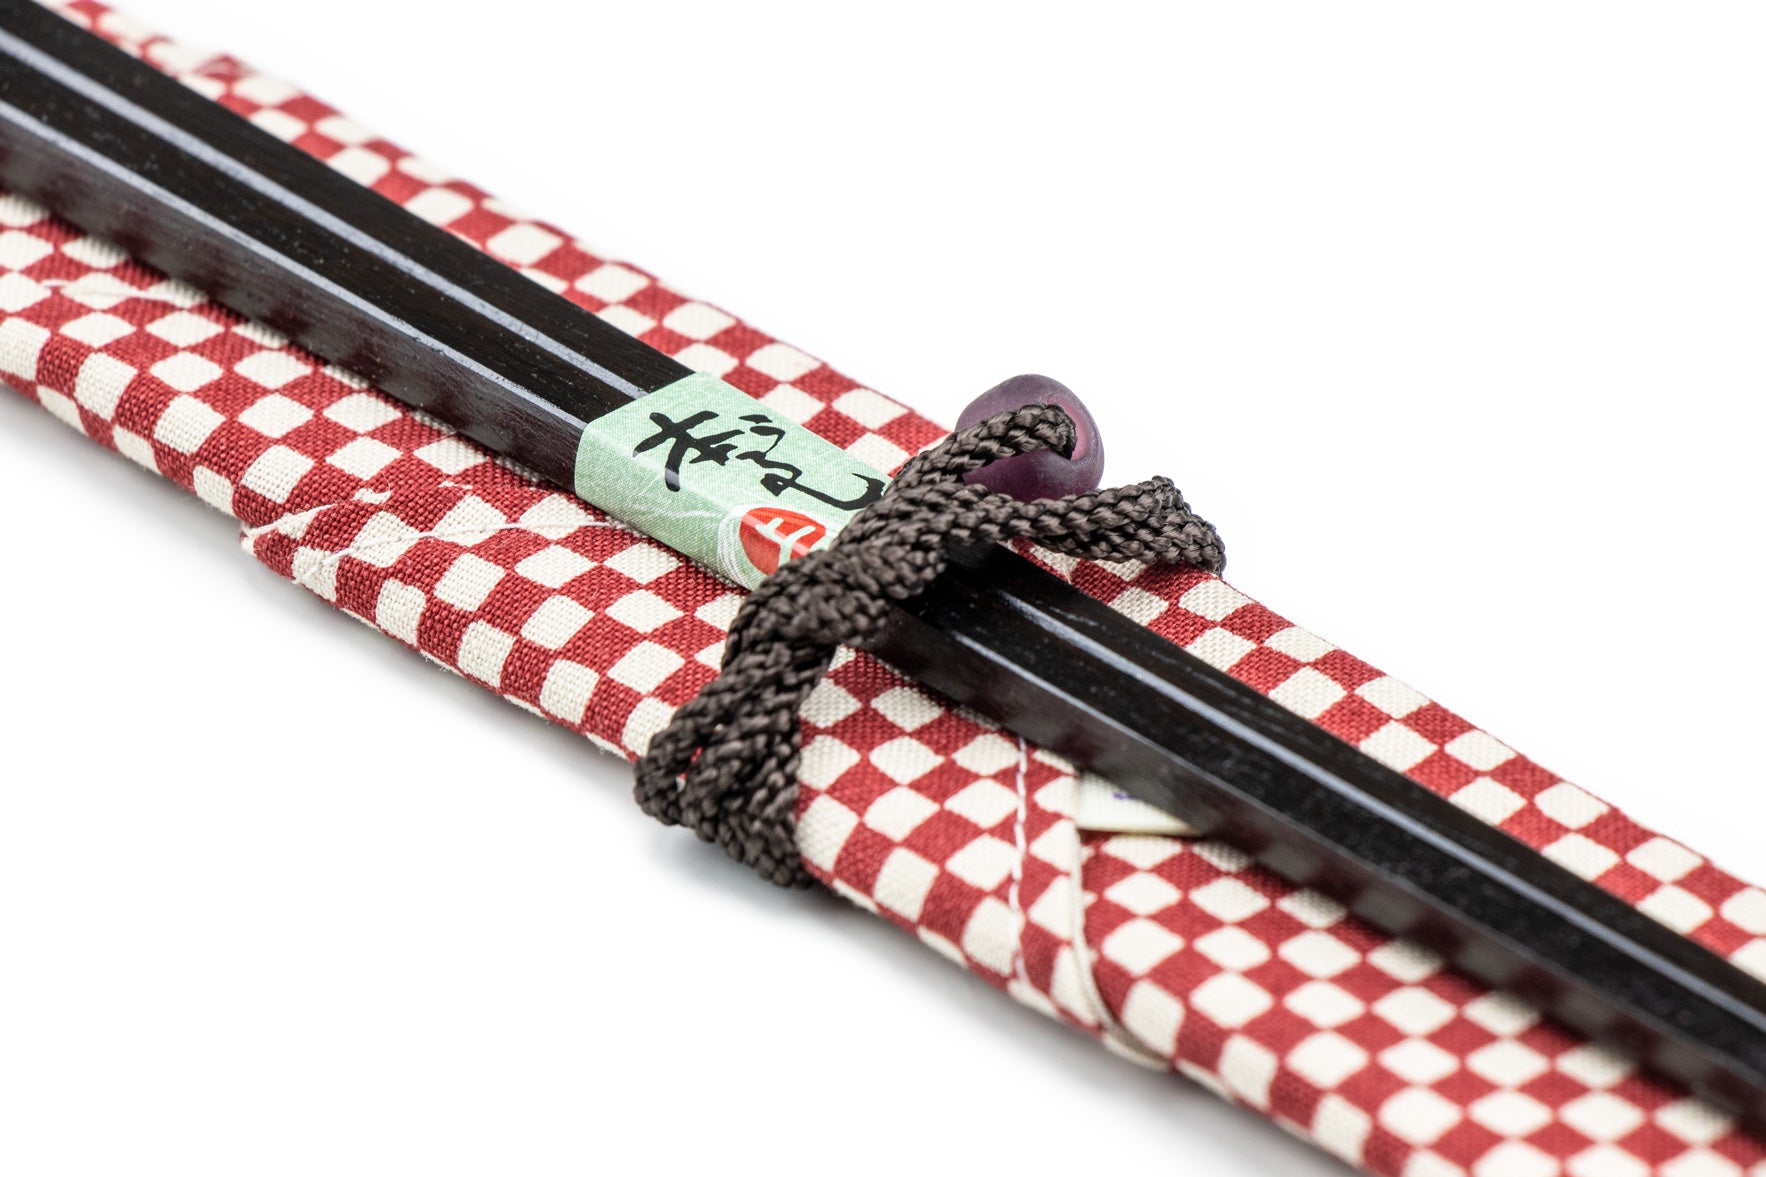 Wakasa Nuri Chopsticks with Cloth Case